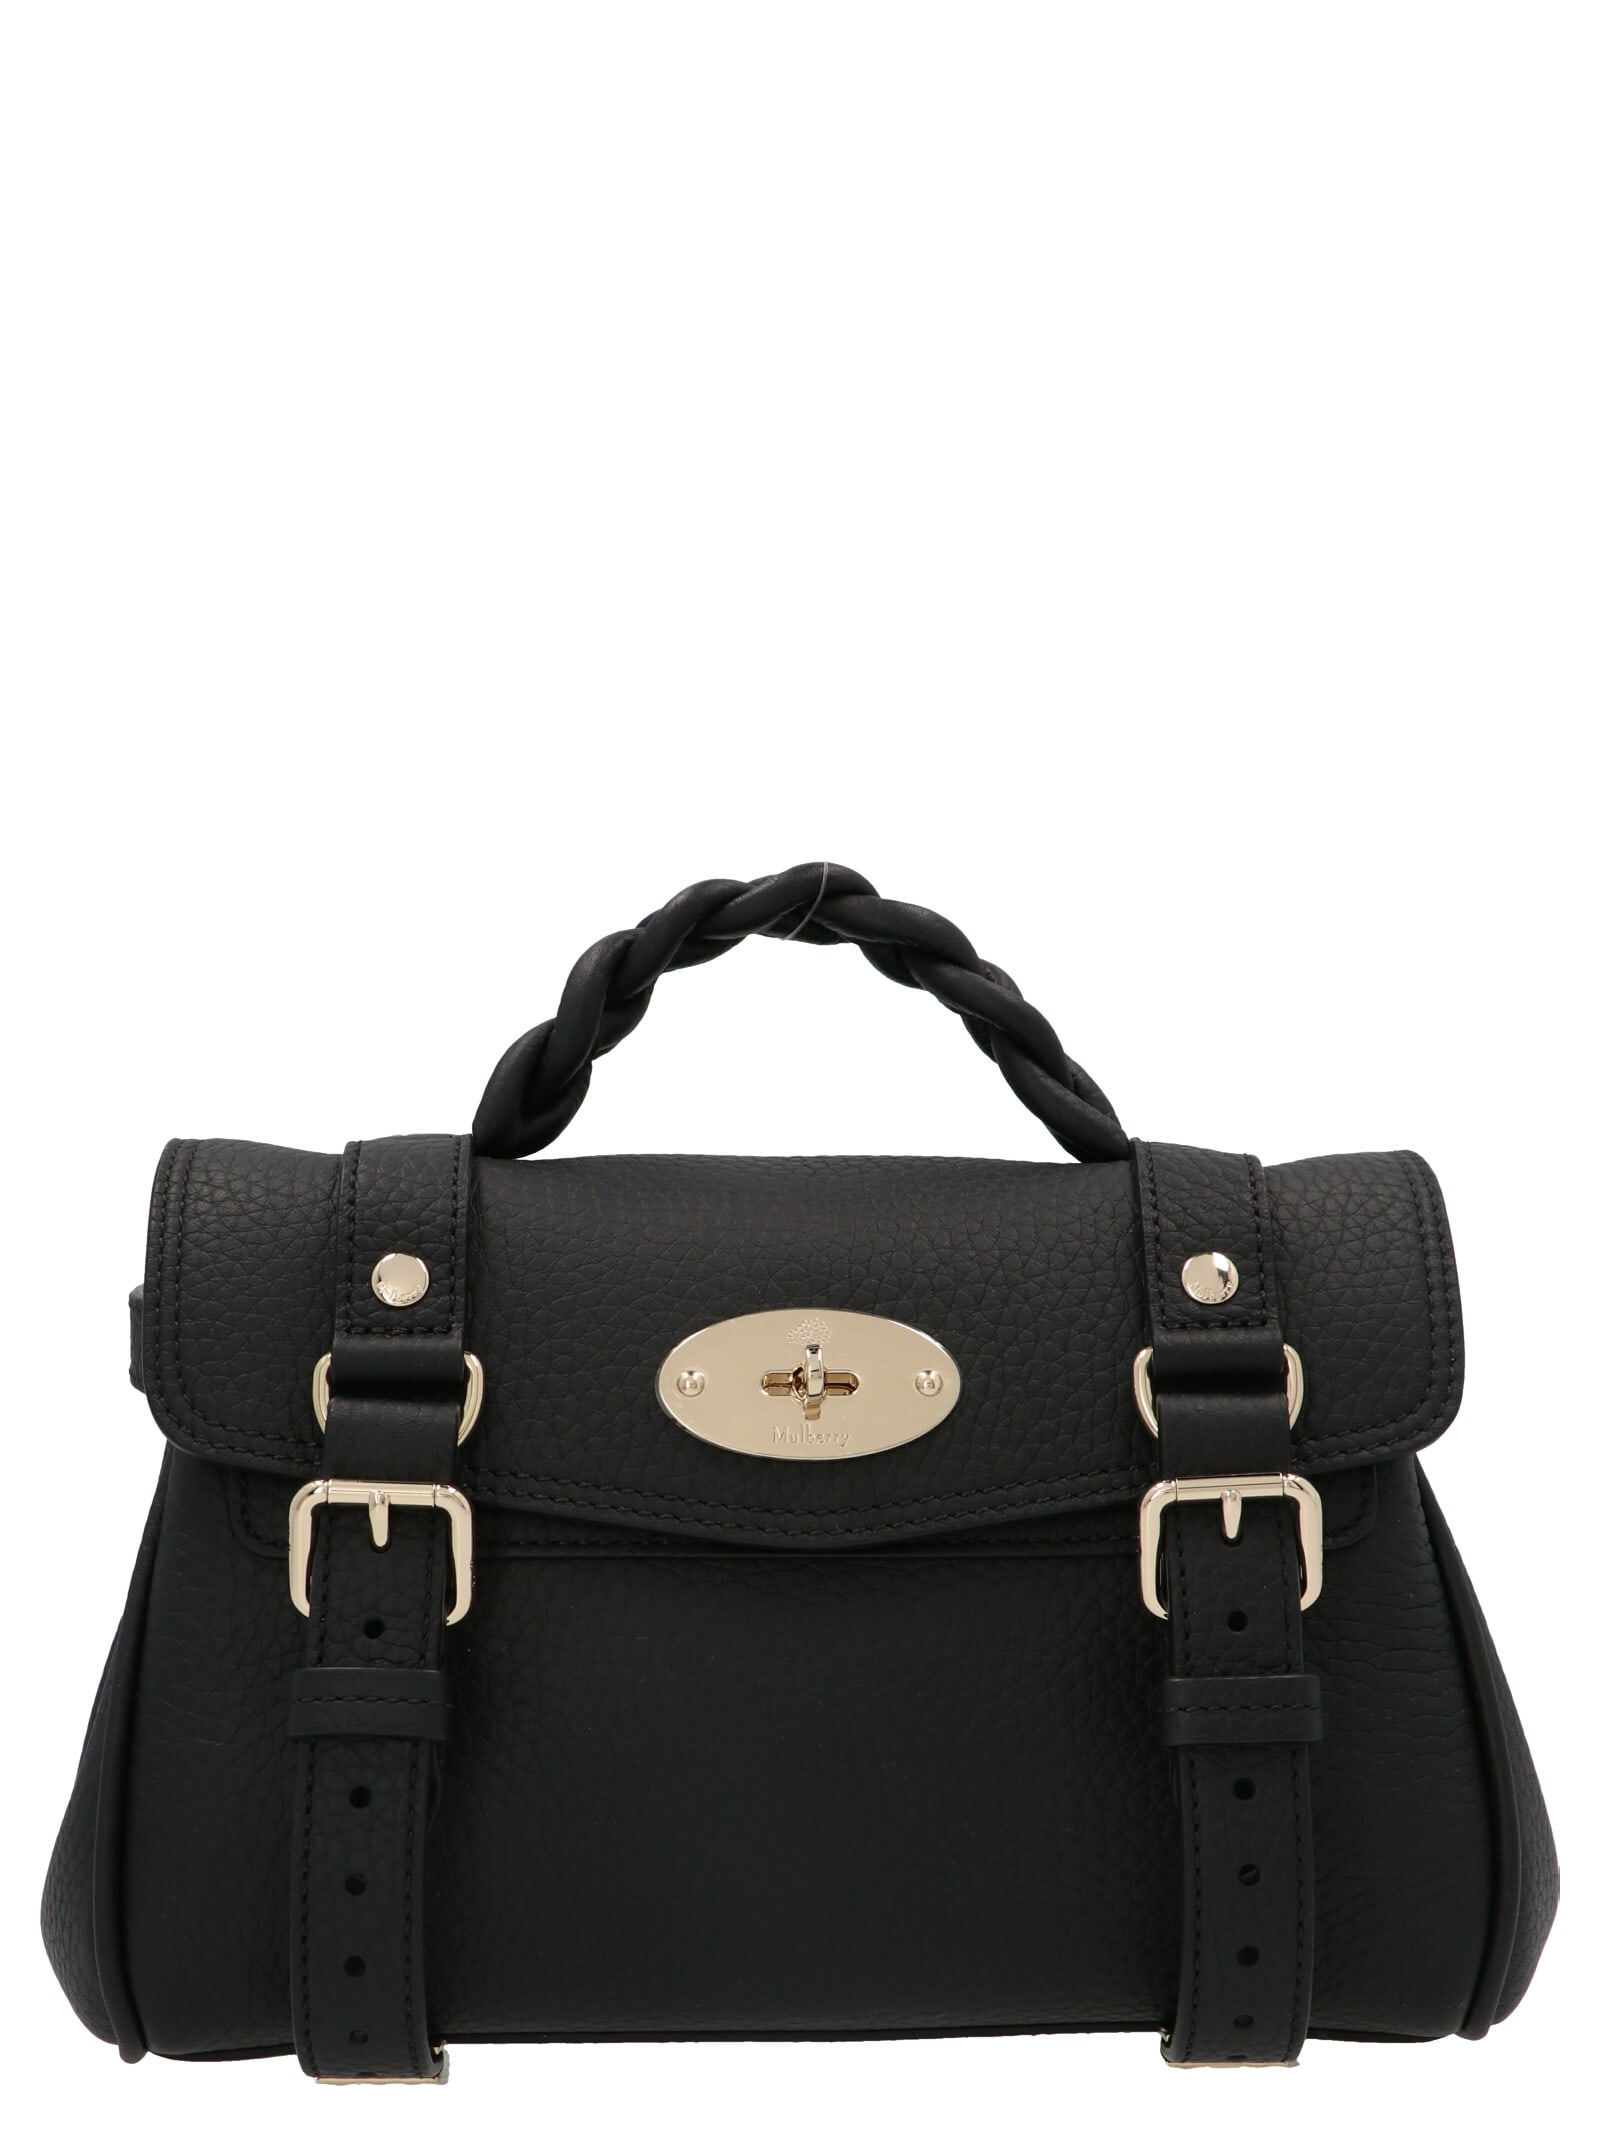 Mulberry Alexa Mini Handbag In Black